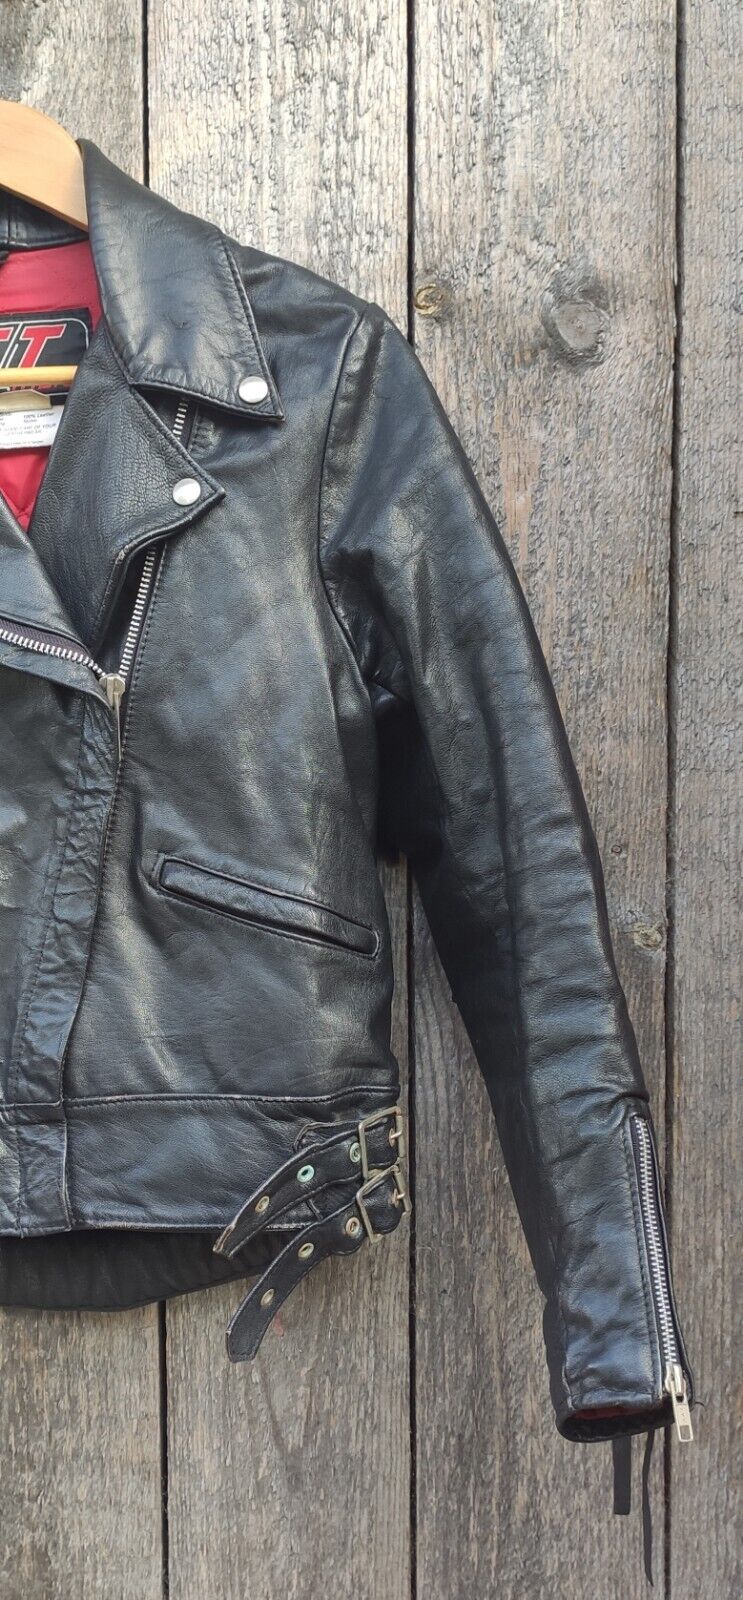 Image of Vintage TT Leathers Motorcycle Jacket With Tassles Size 38" Biker/Rocker